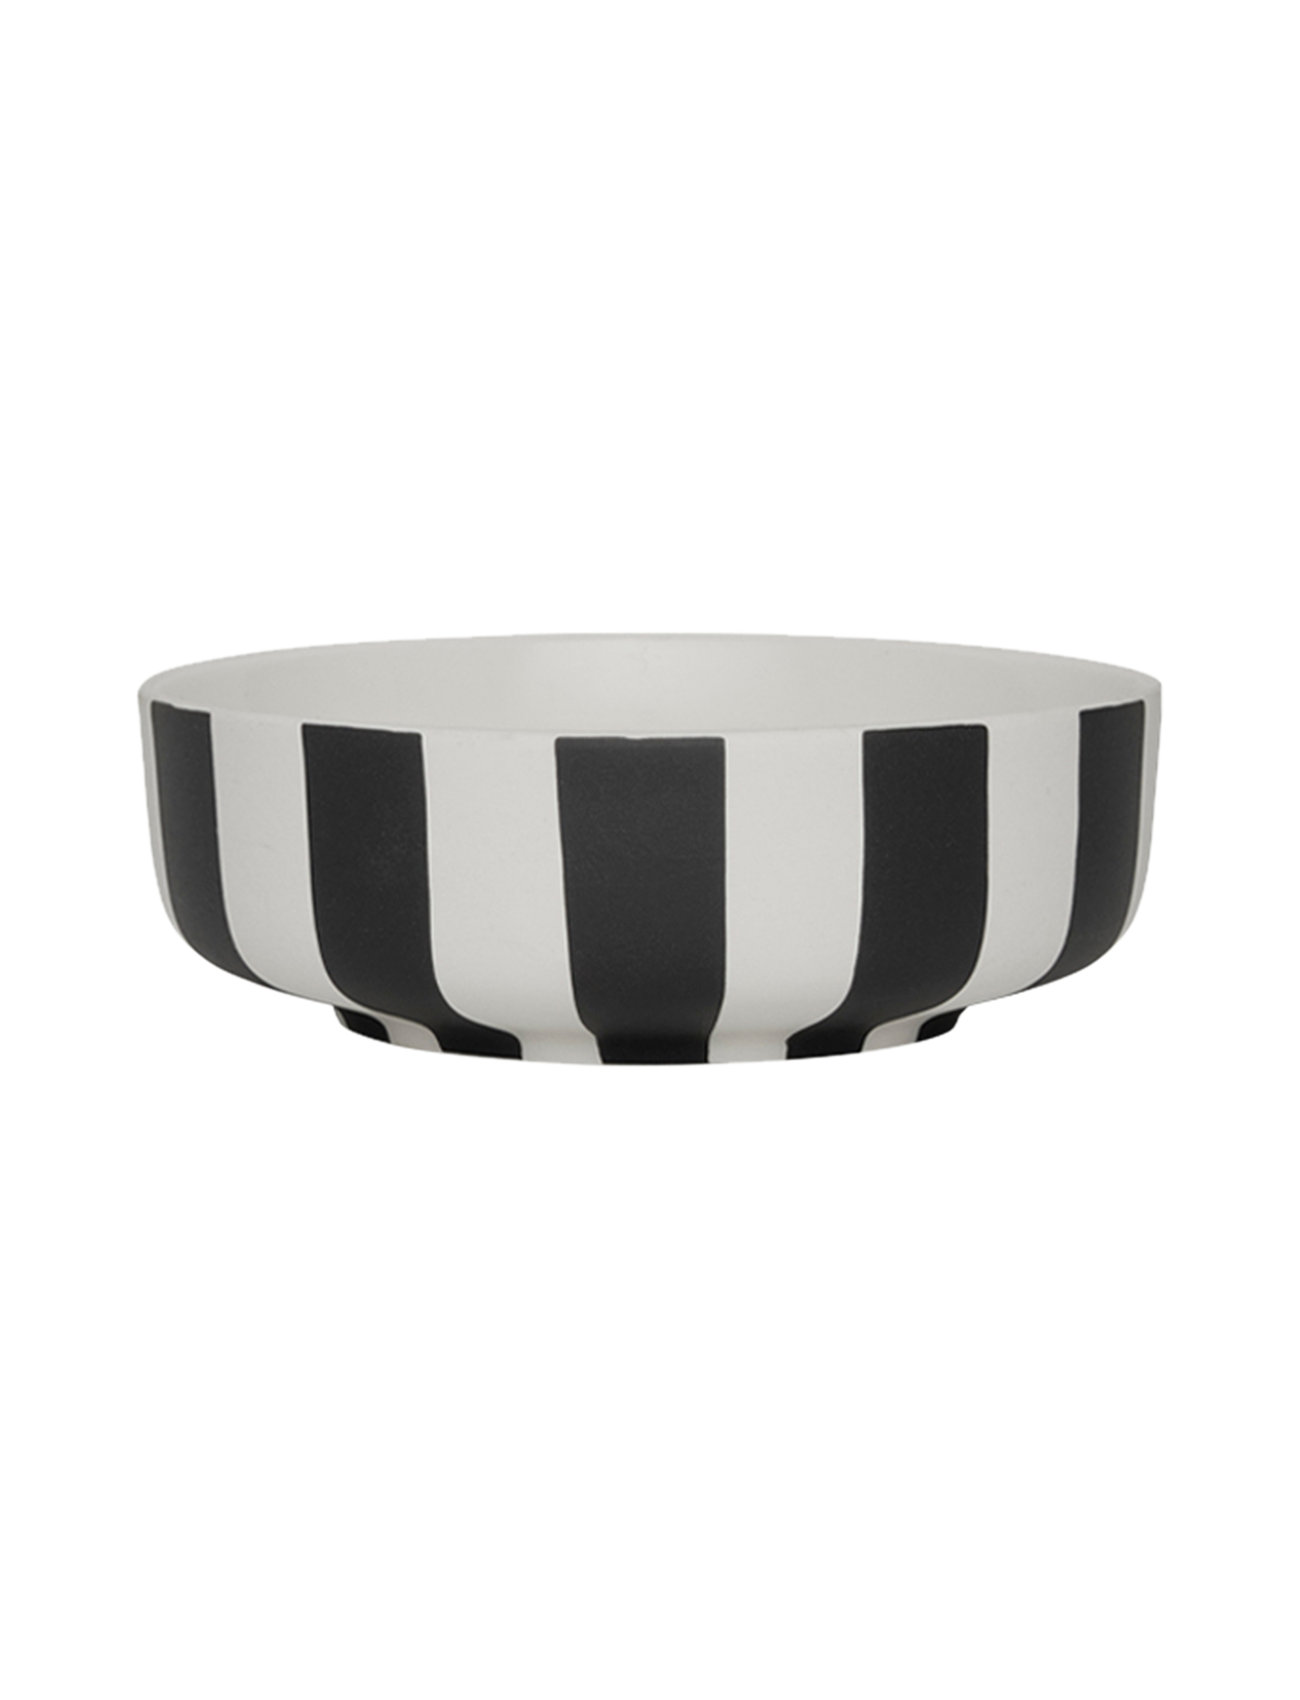 Toppu Bowl - Small Home Tableware Bowls Breakfast Bowls White OYOY Living Design